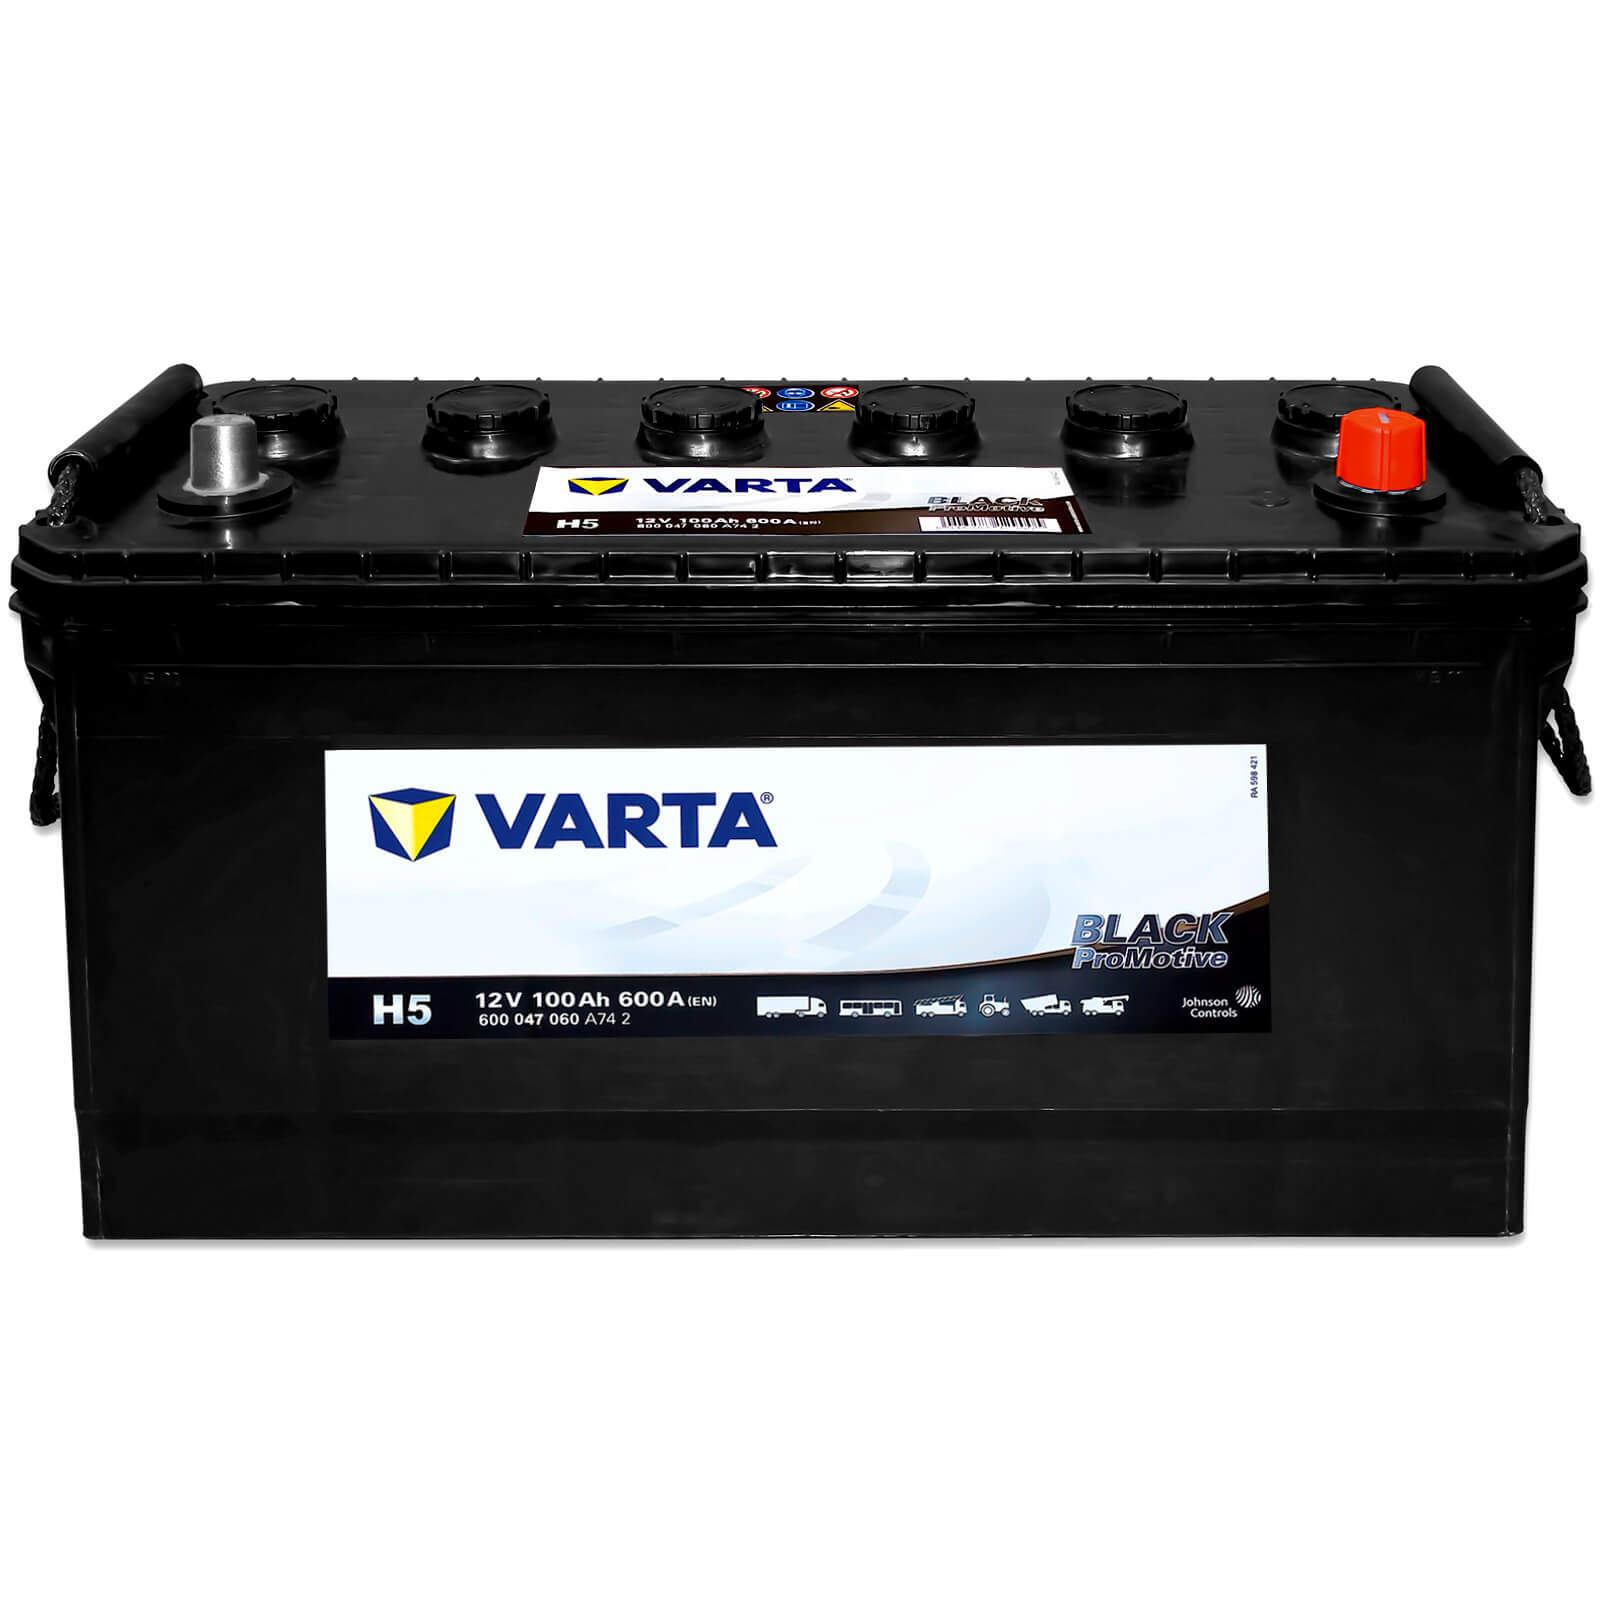 Varta H5 Promotive Black 12V 100Ah 600A/EN